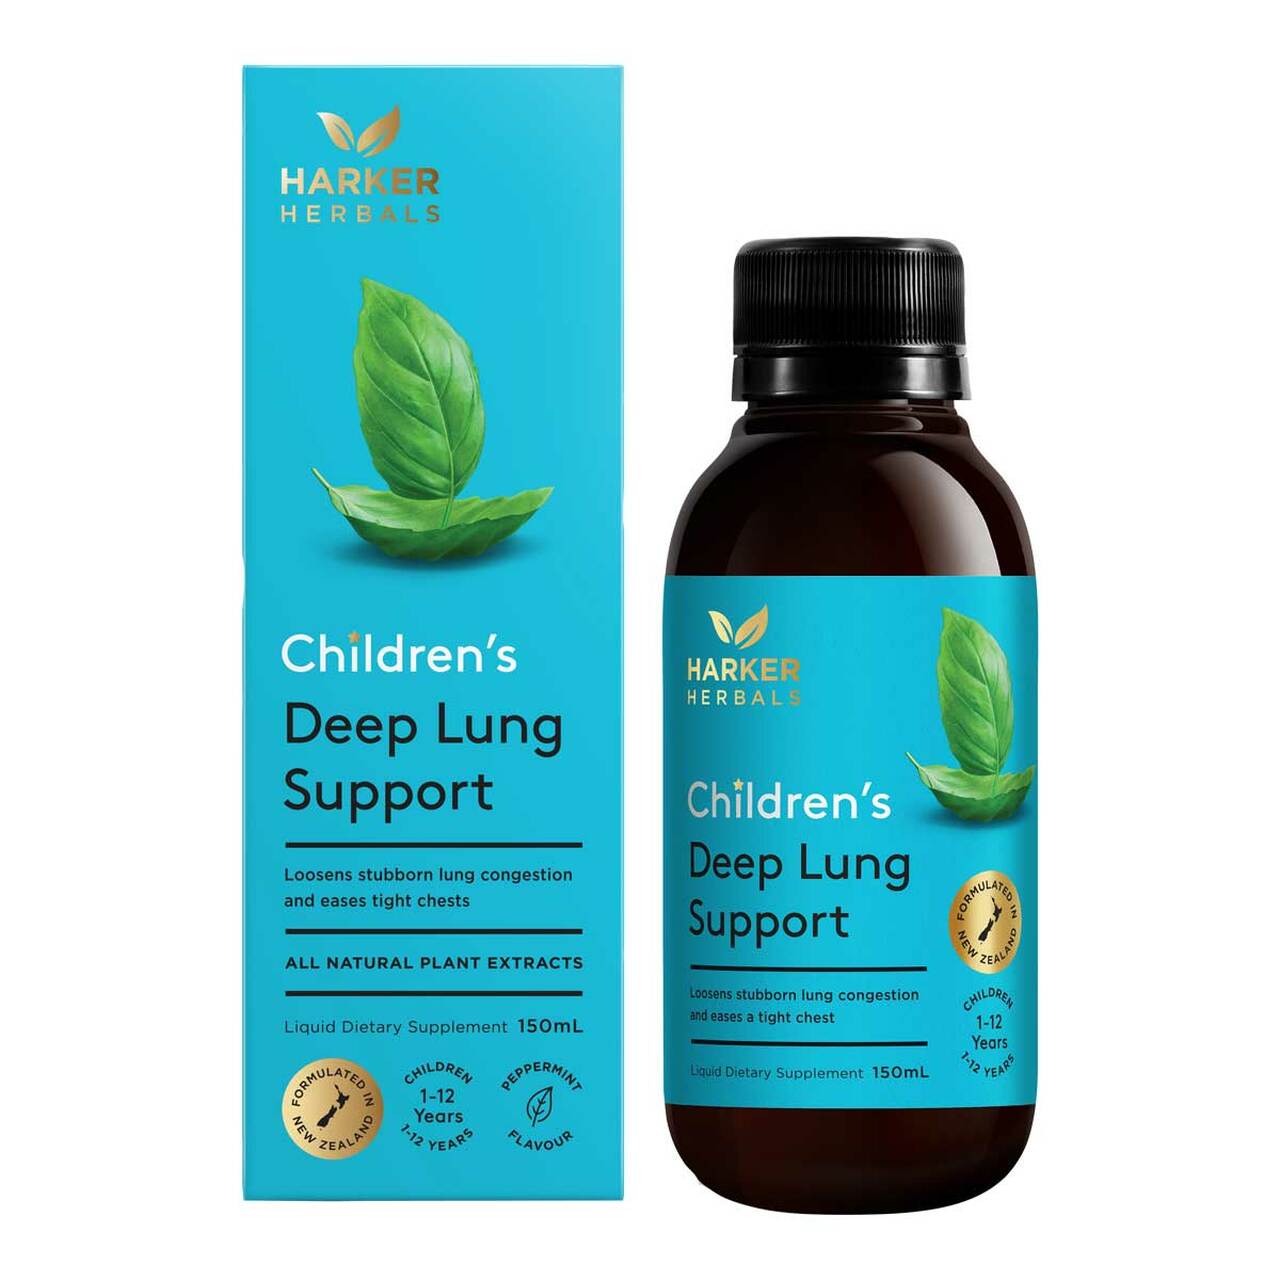 harker-herbals-childrens-deep-lung-support-150ml-mhcbe-bottle-box__25672.1605484994